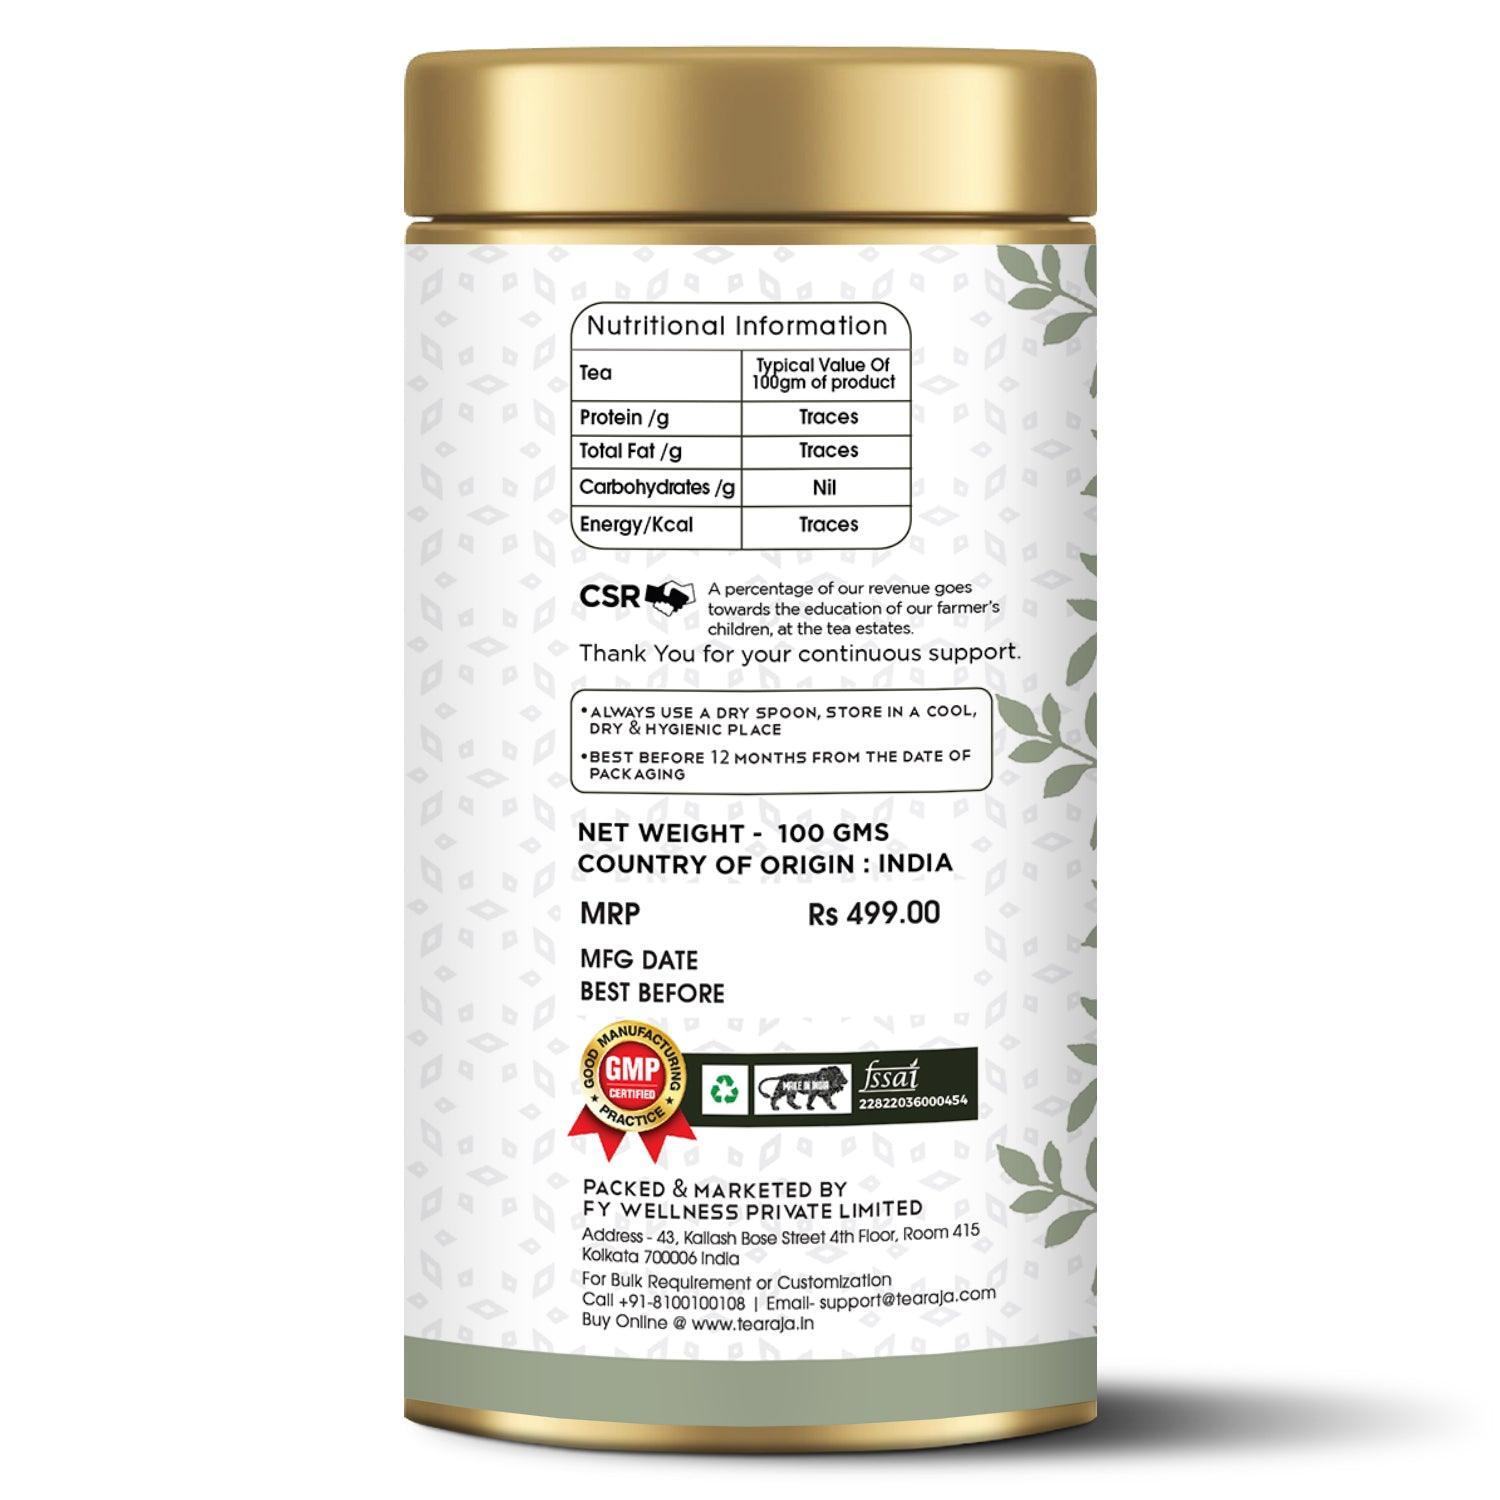 Temi Special Organic Black Tea USDA Certified - Tearaja